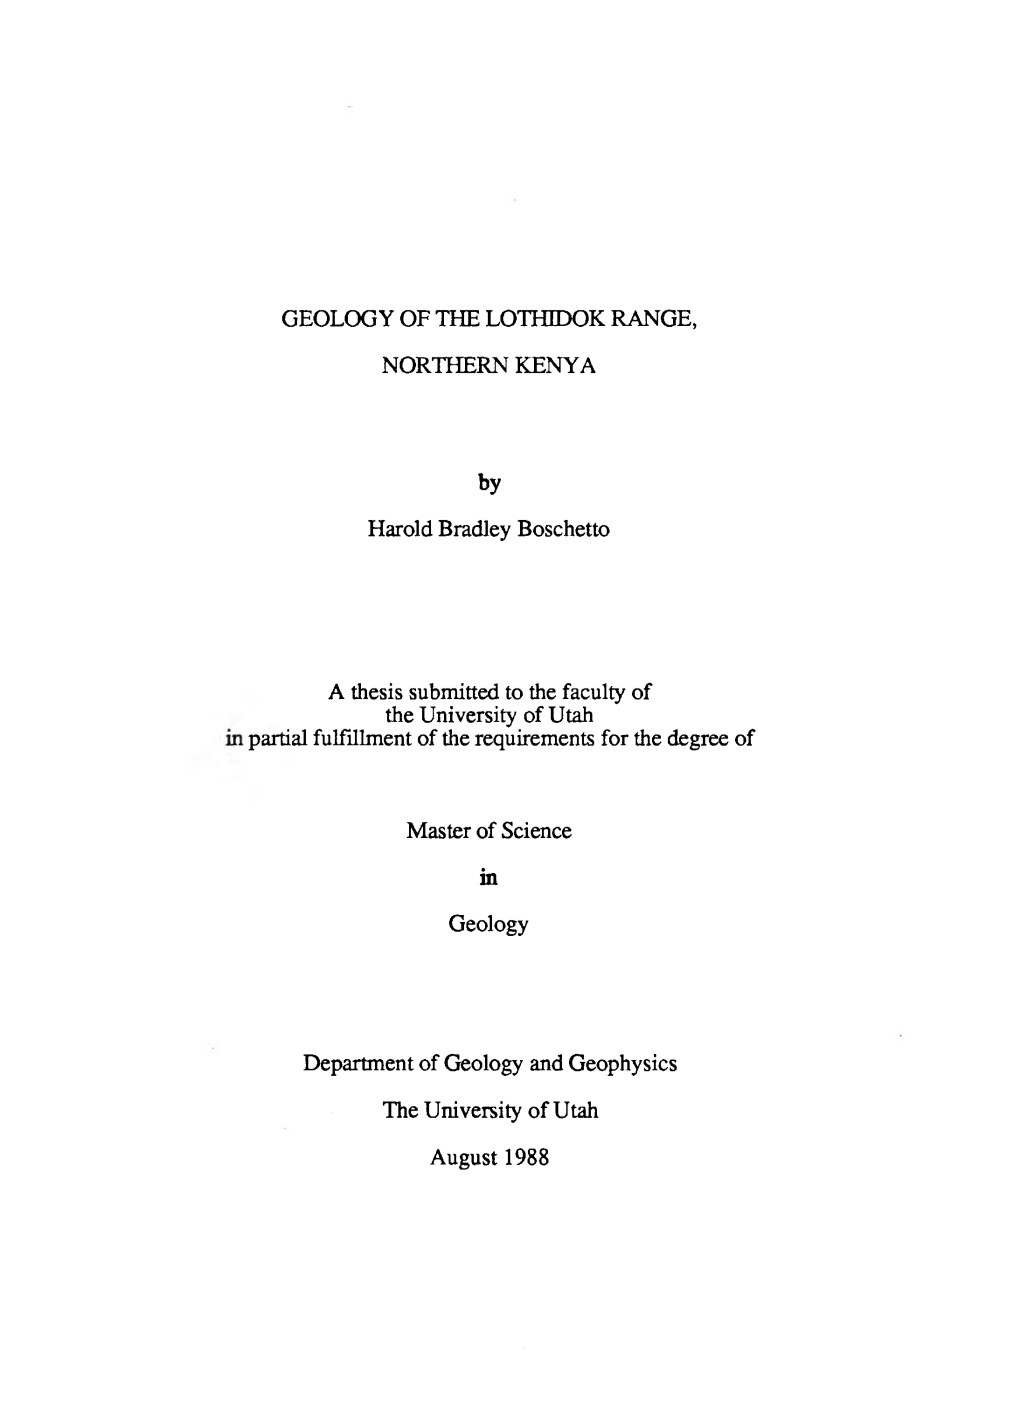 GEOLOGY of the LOTHIDOK RANGE, NORTHERN KENYA By